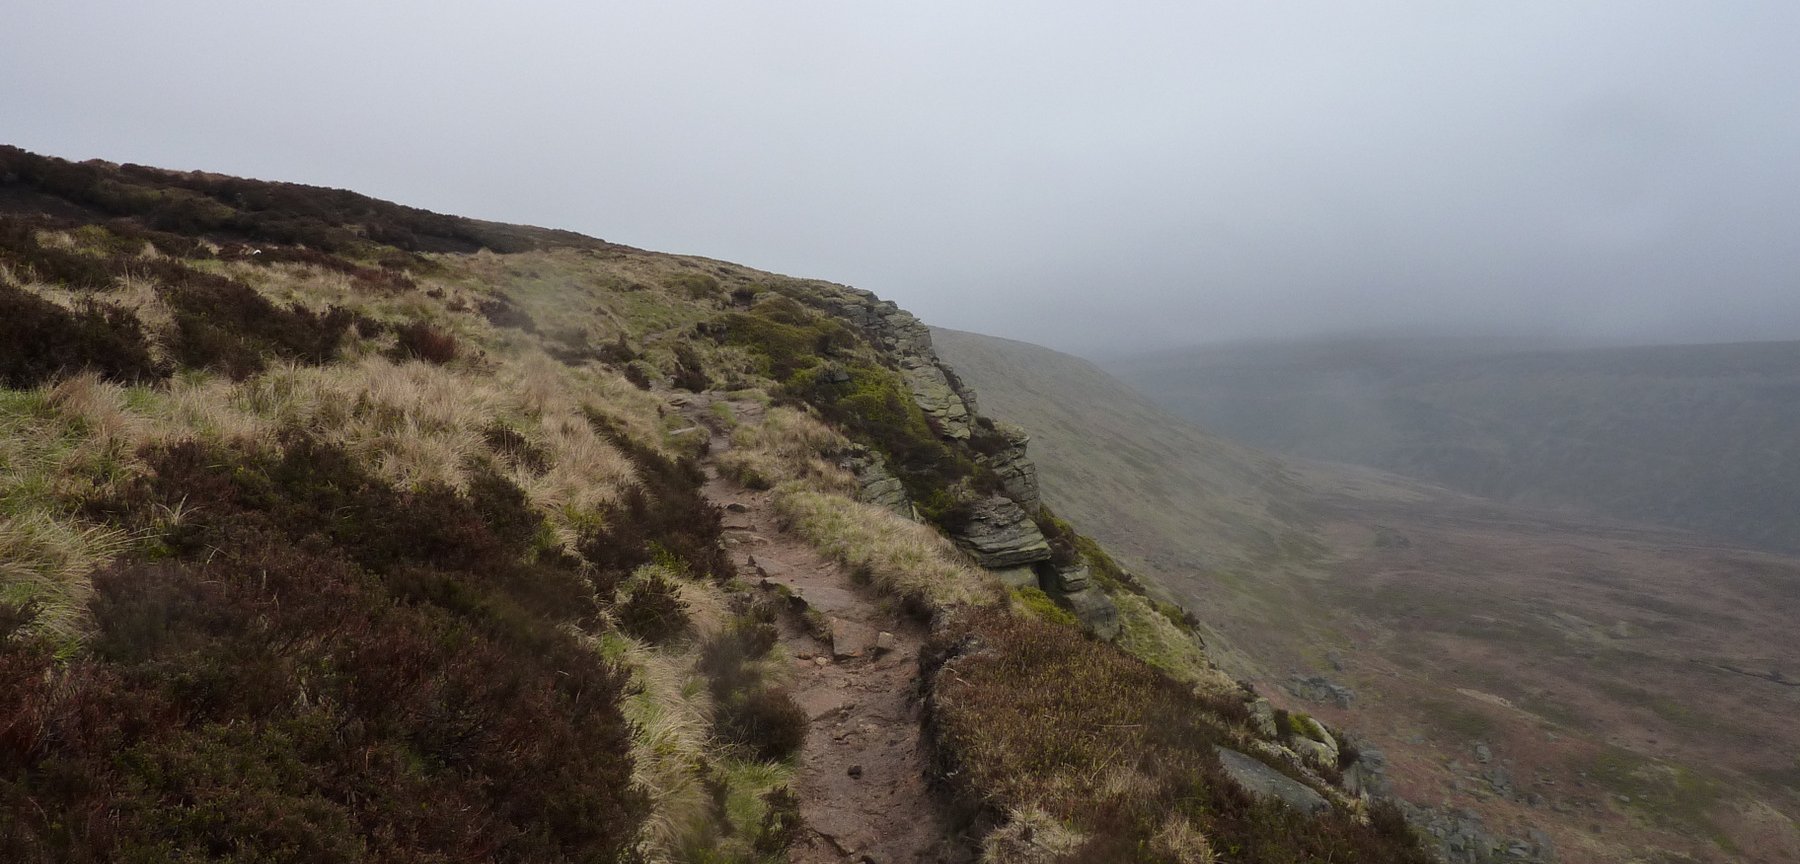 The path heads up towards Laddow Rocks